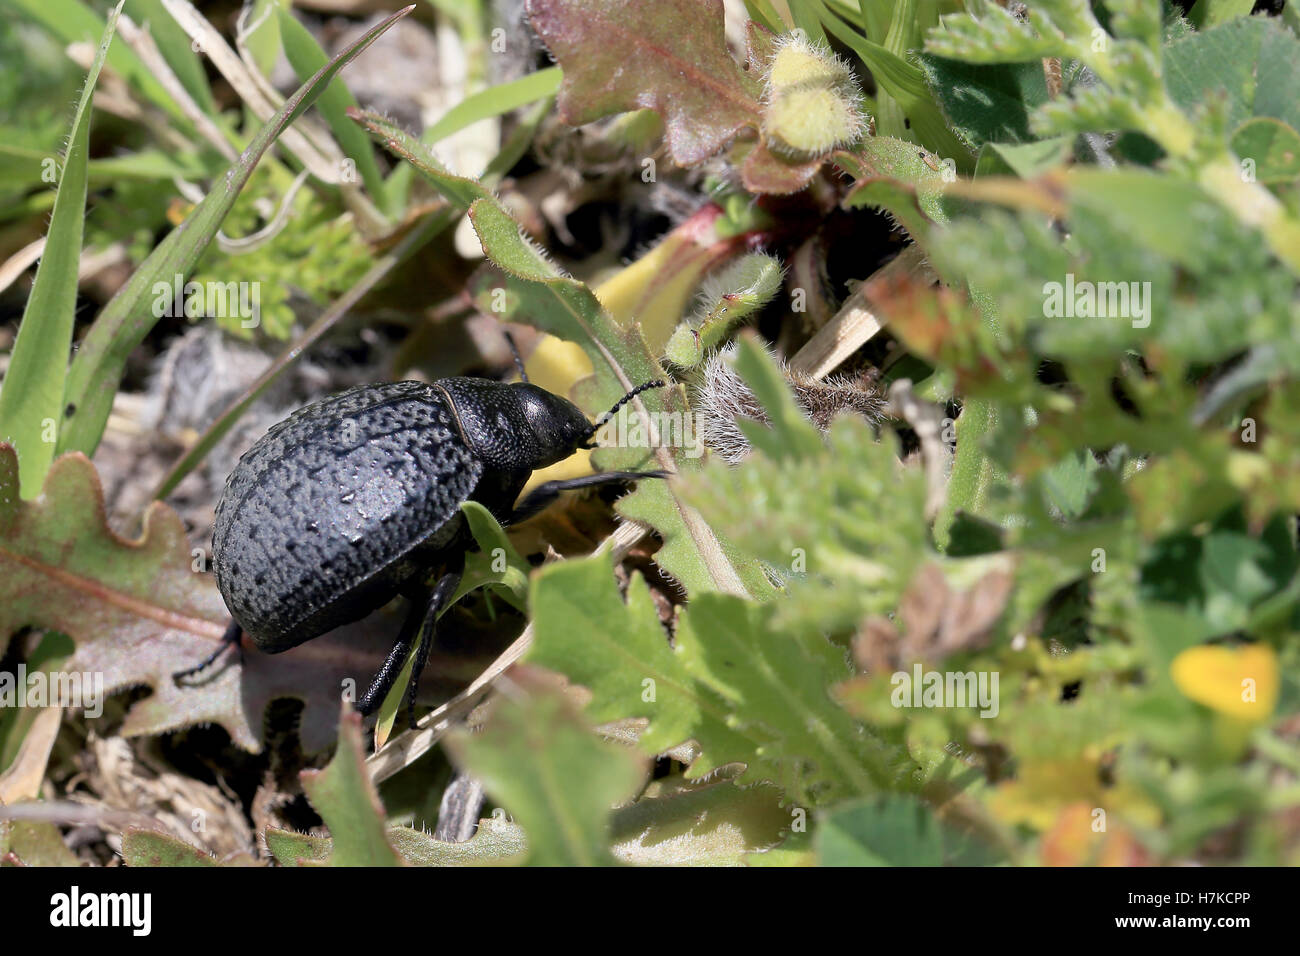 Tenebrionidae Beetle, Cadiz Province, Spain. Stock Photo